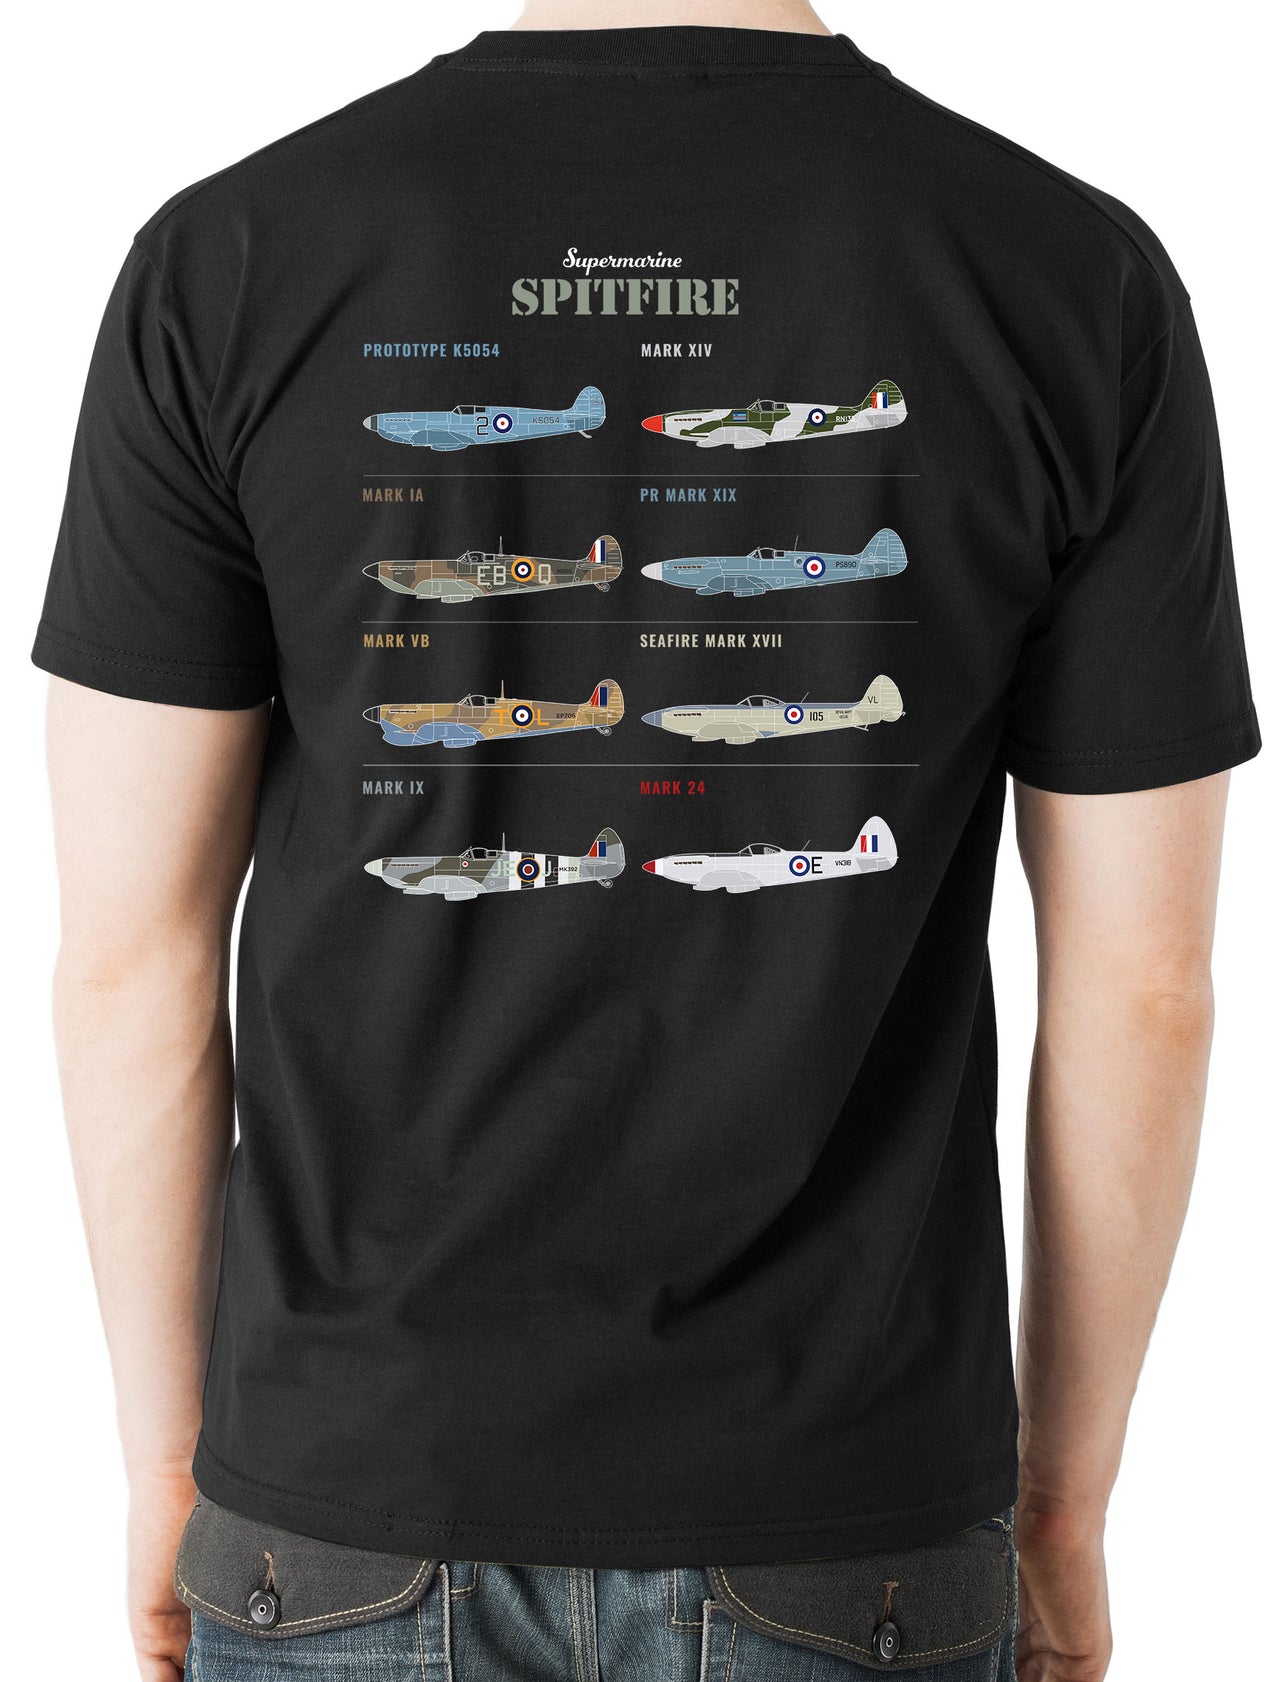 Spitfire MK VB - T-shirt